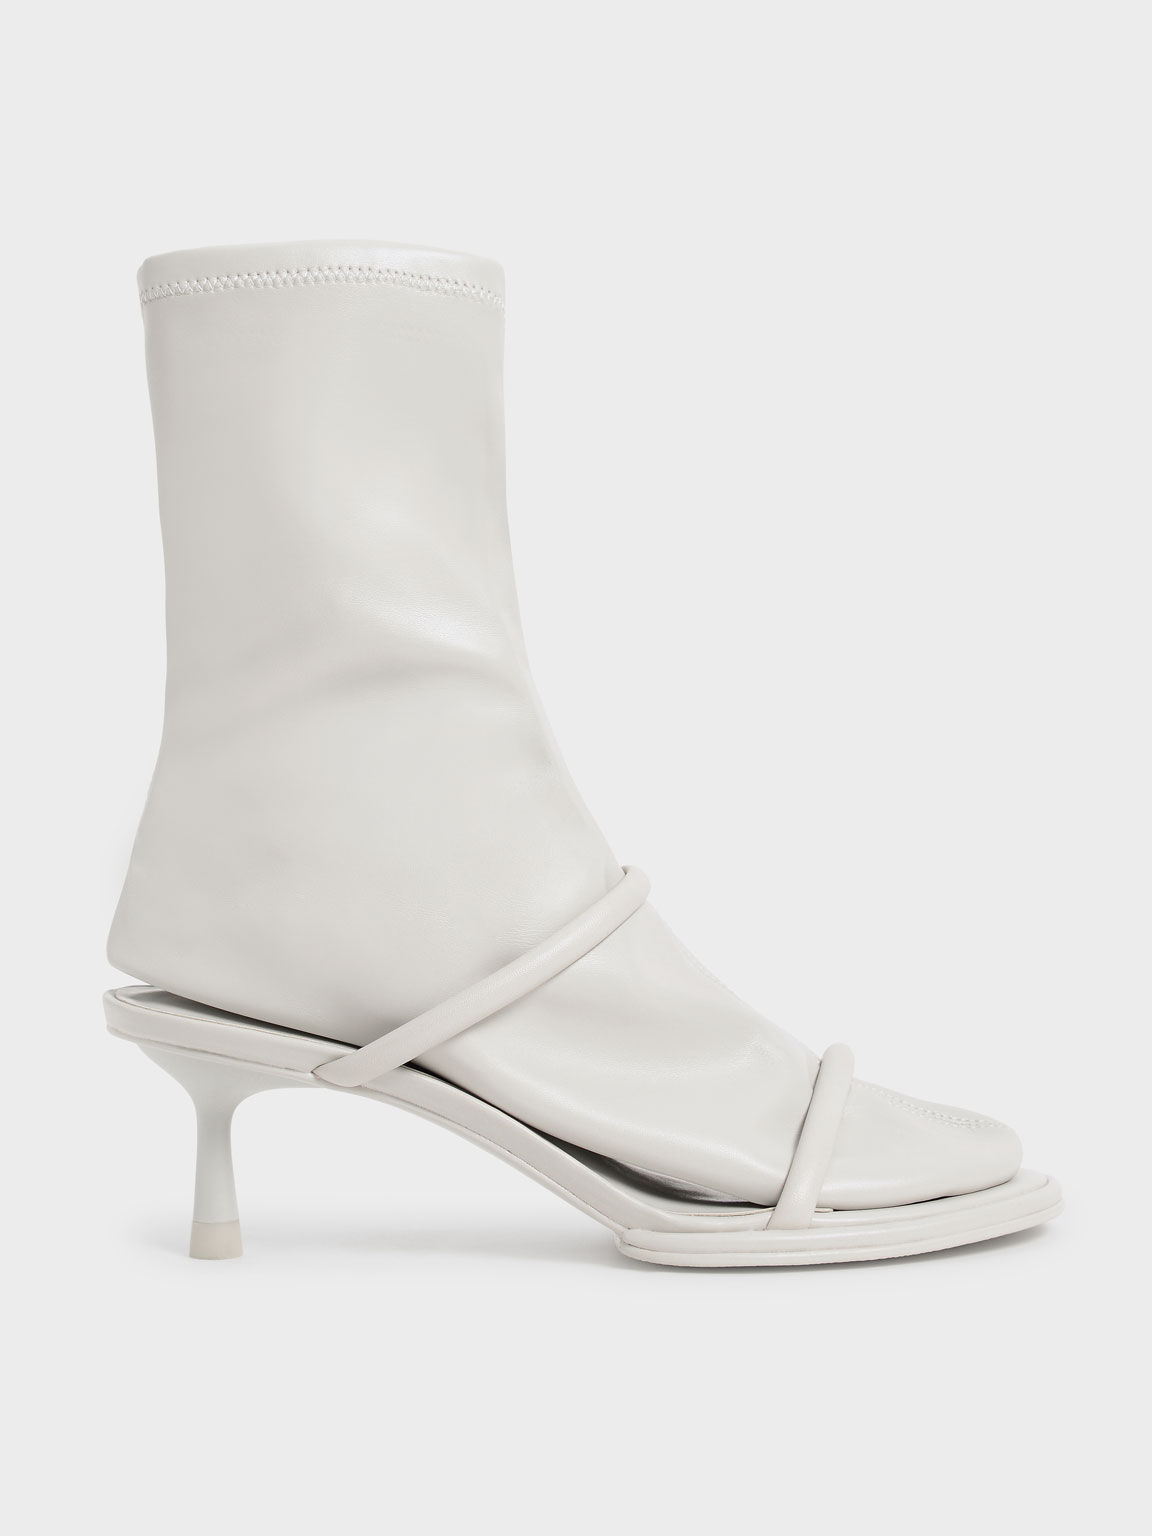 Lucile Stiletto Calf Boots, Grey, hi-res